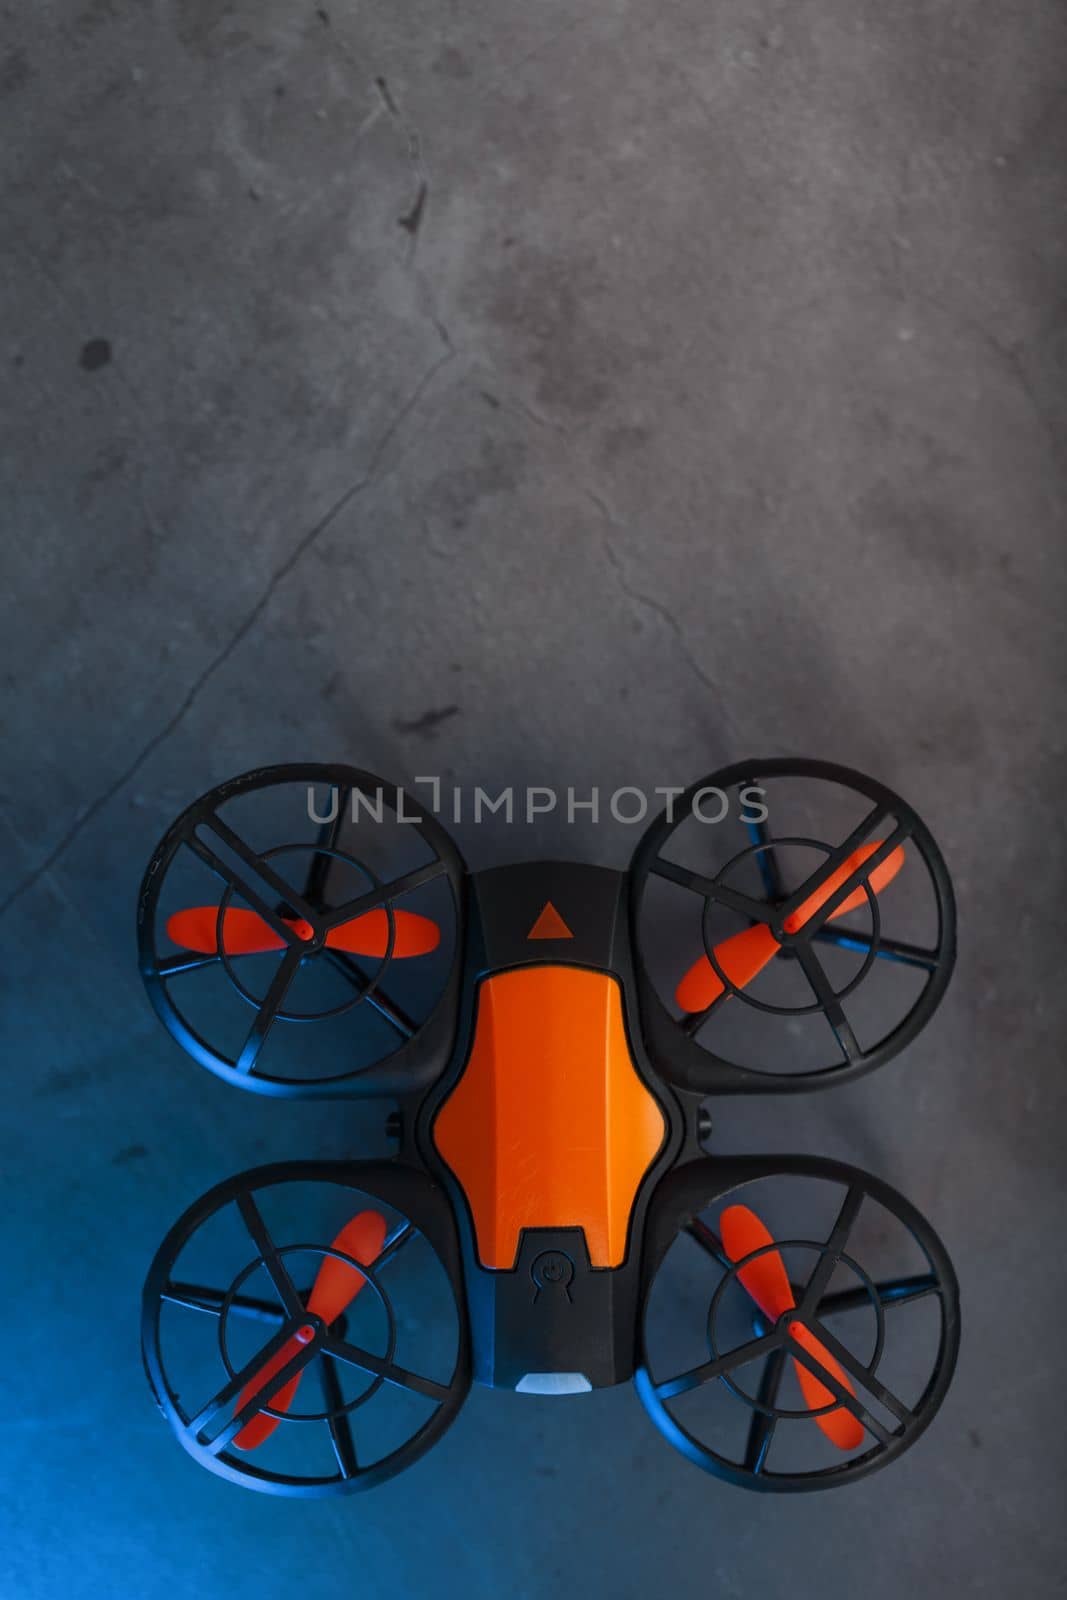 Orange quadcopter mini spy drone on a dark background with blue backlight by AlexGrec